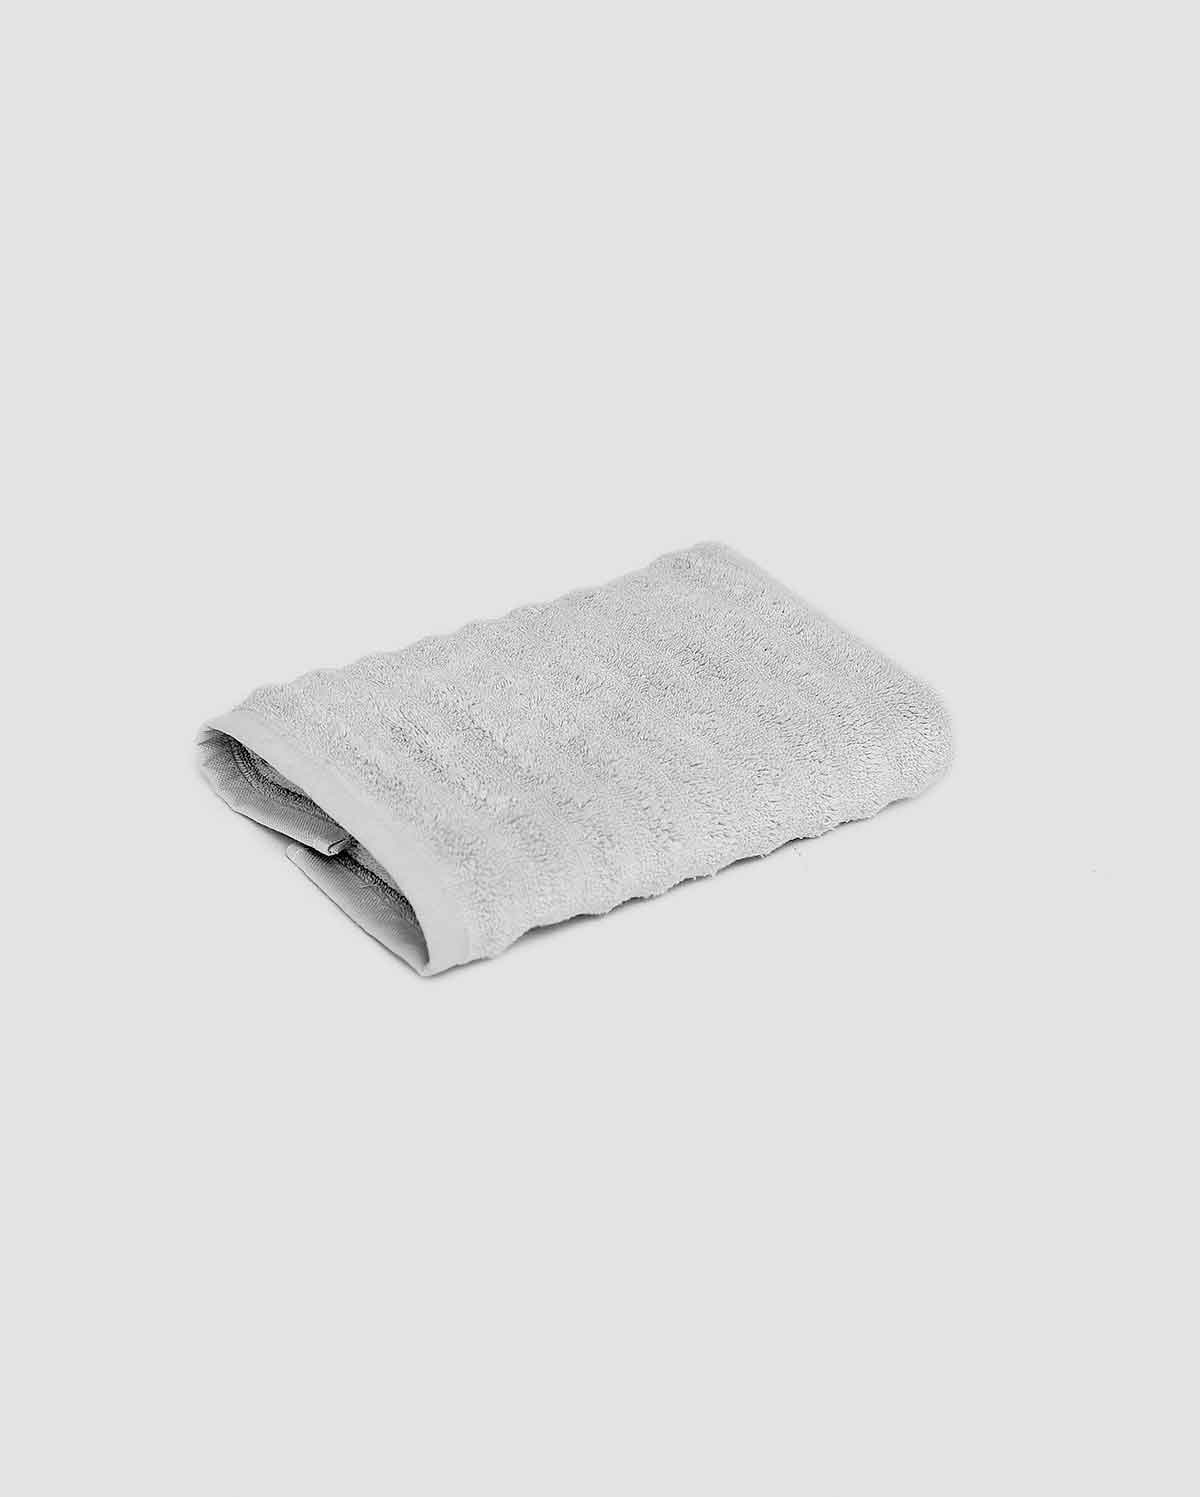 Ribbed Soft Cotton Towel Set - Grey (3 Towels)